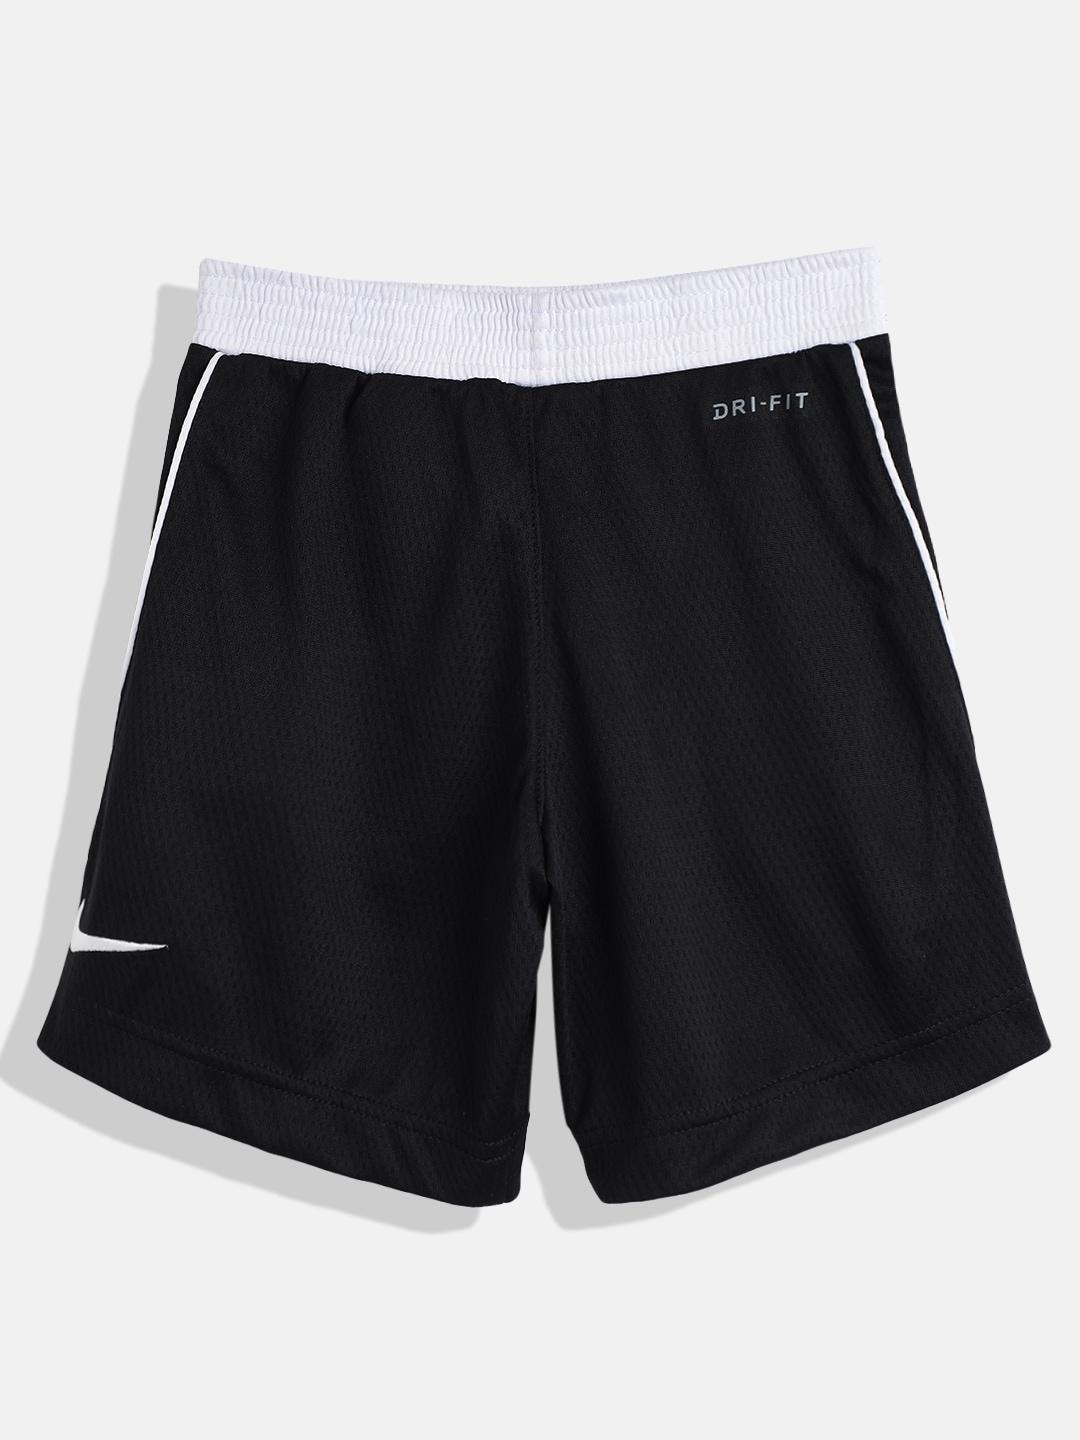 nike-boys-black-&-white-dri-fit-basketball-shorts